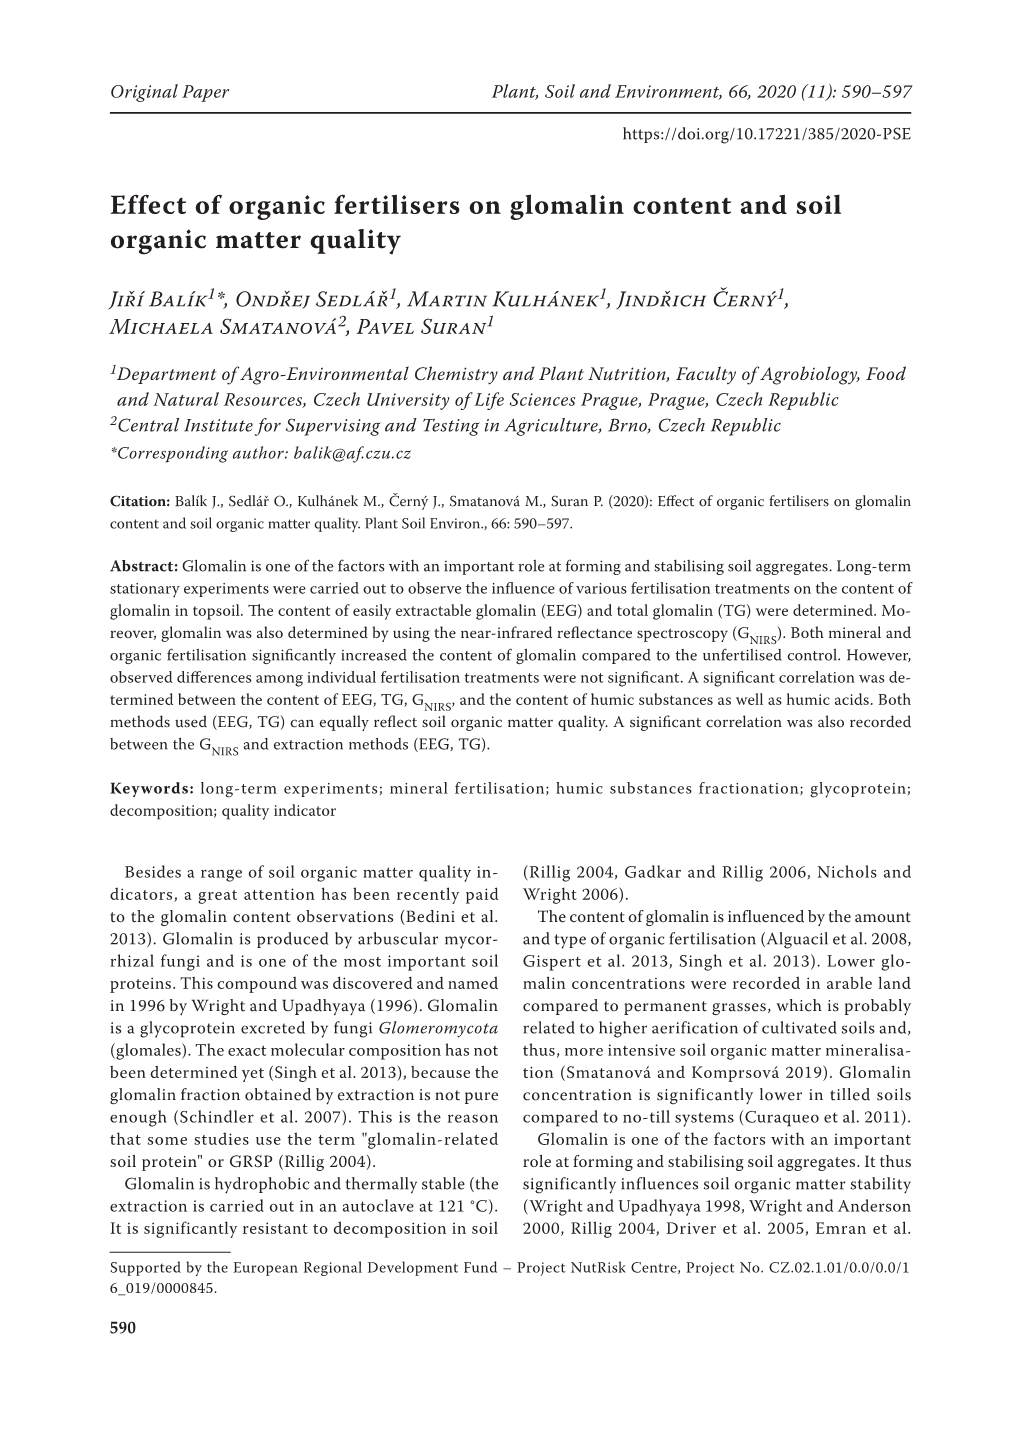 Effect of Organic Fertilisers on Glomalin Content and Soil Organic Matter Quality